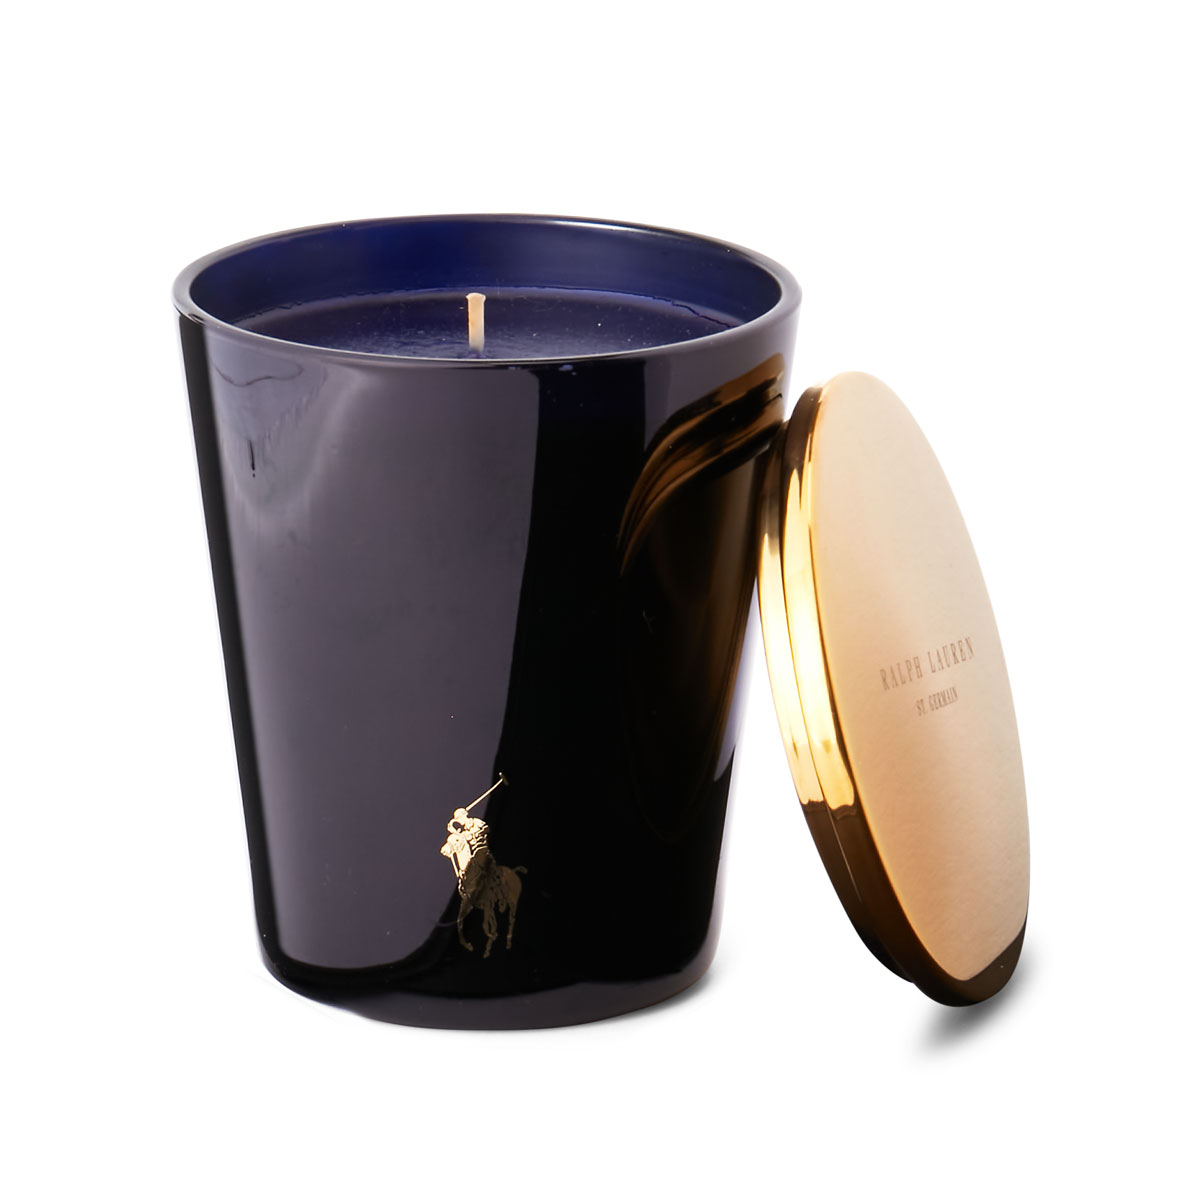 Ralph Lauren Amalfi Coast Single Wick Candle in Gift Box